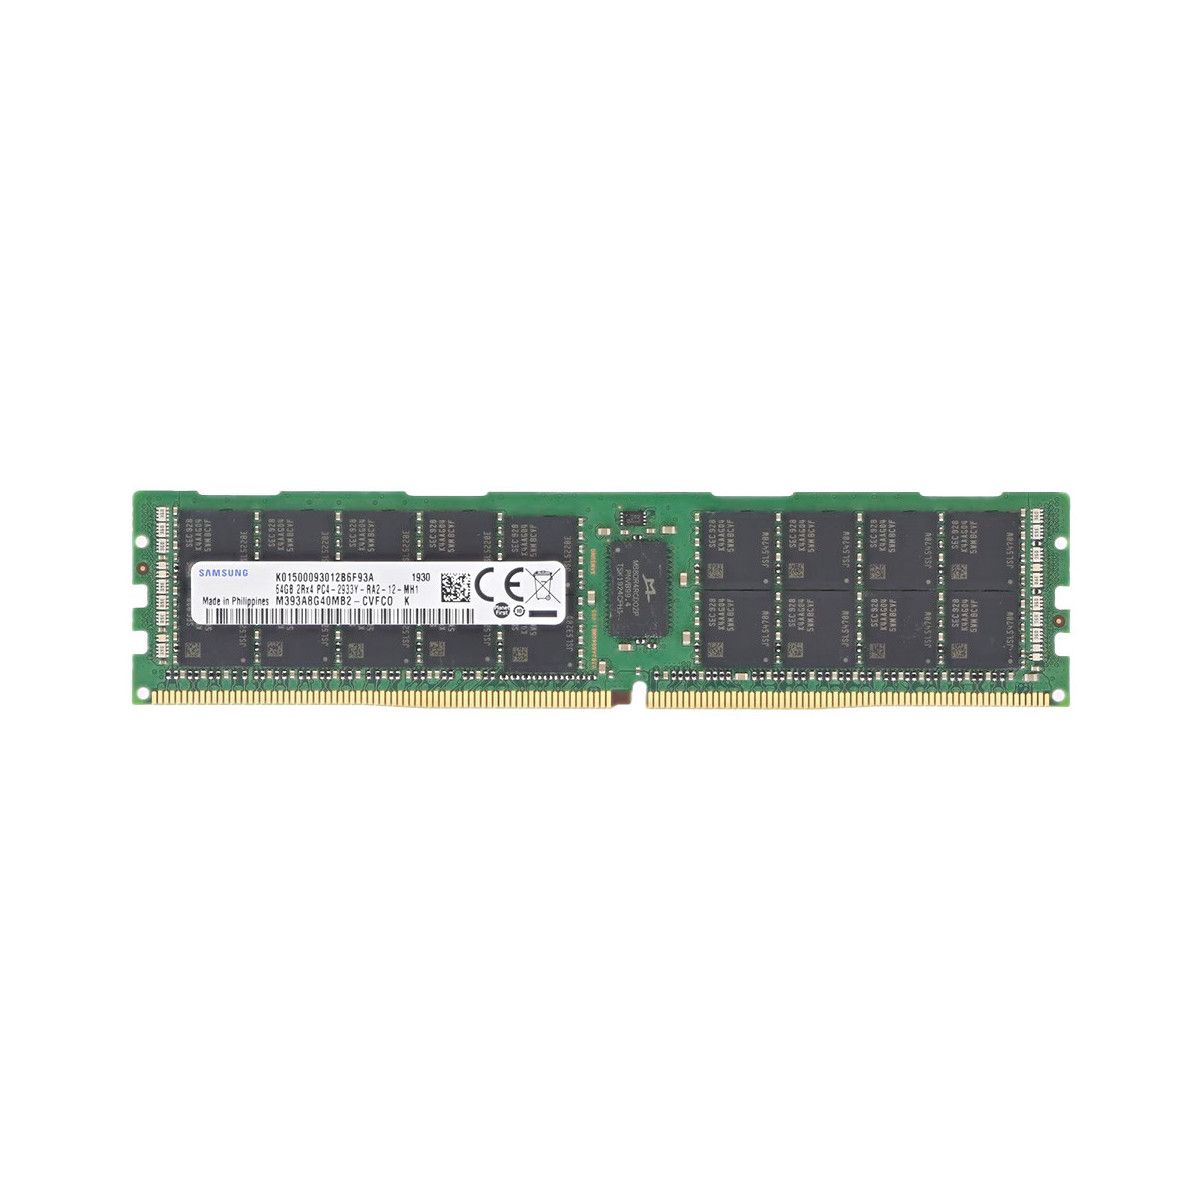 AA579530-MS - Memstar 1x 64GB DDR4-2933 RDIMM PC4-23466U-R - Mem-Star compatibel OEM geheugen 1 - Memstar 